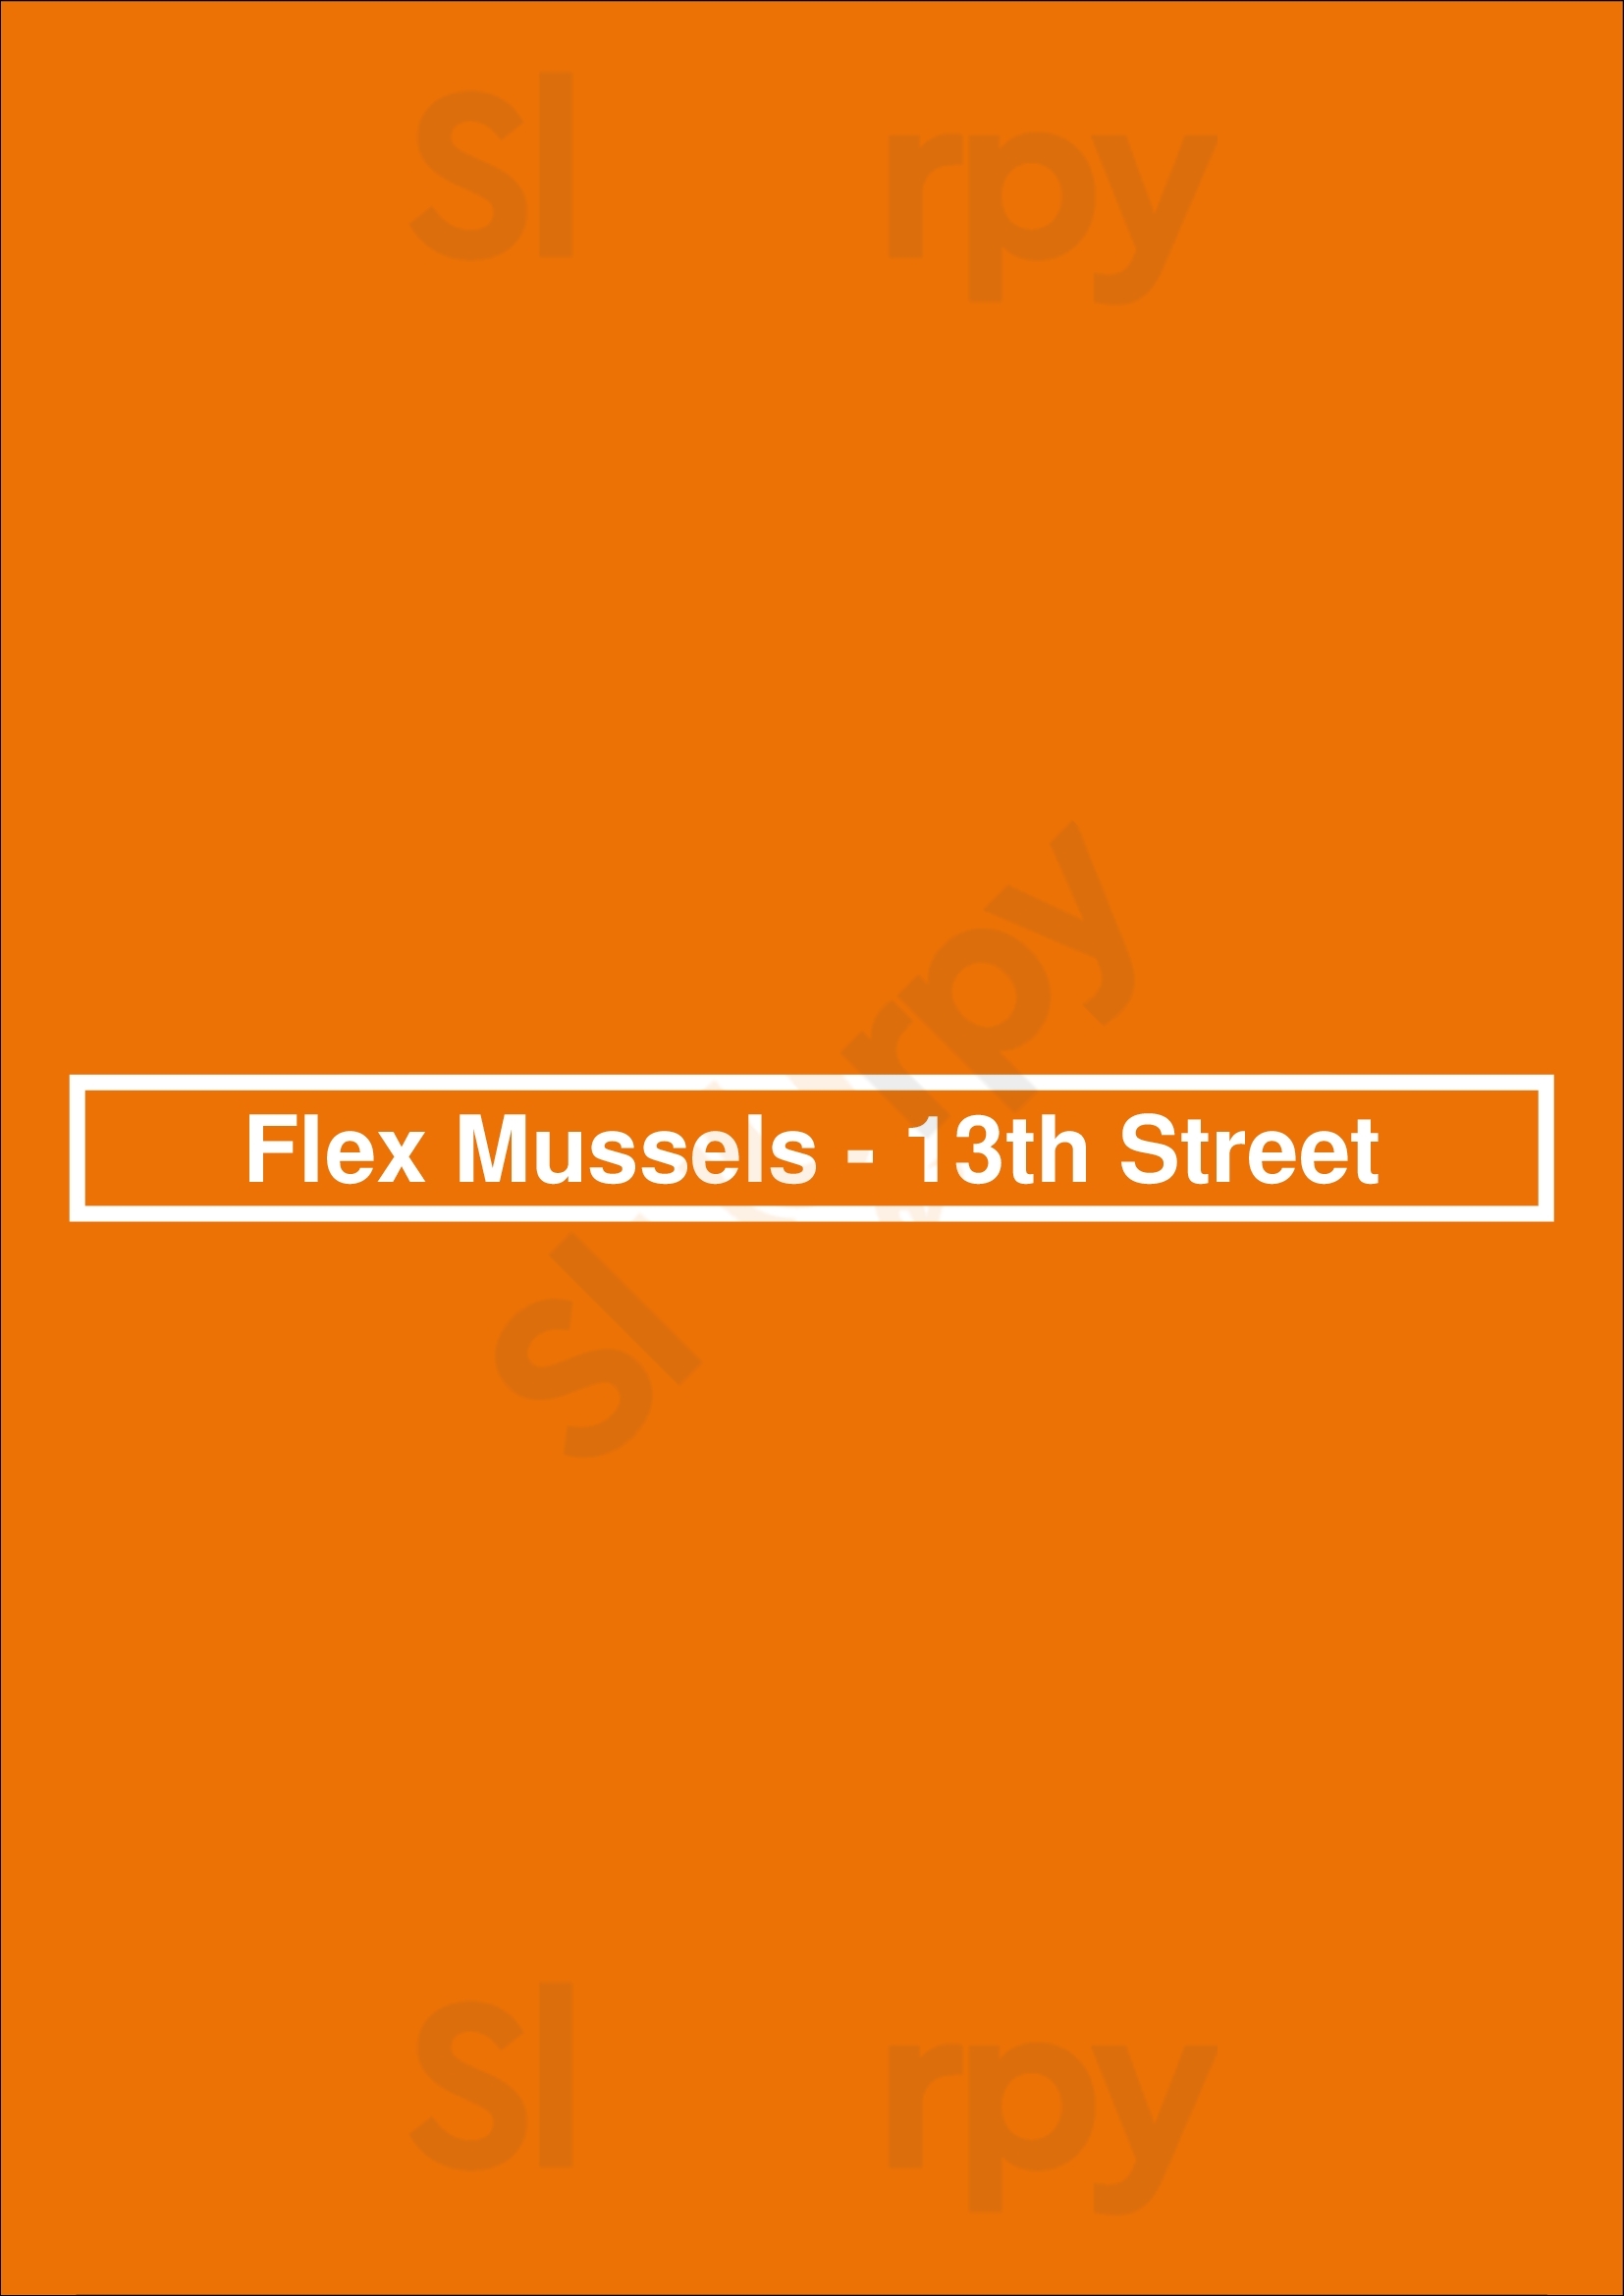 Flex Mussels New York City Menu - 1